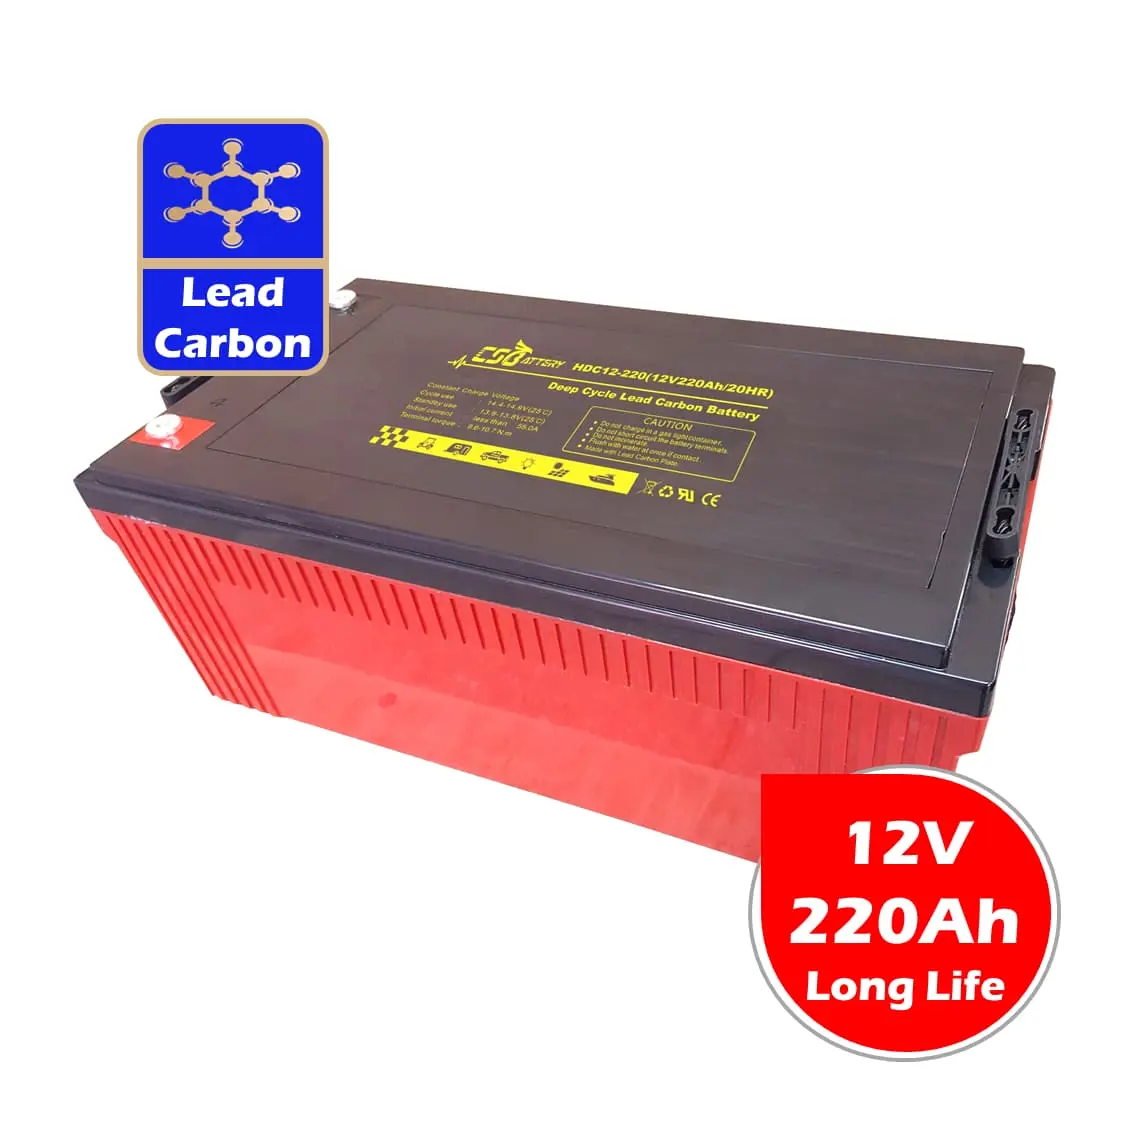 CSBattery Bateria de carbono de chumbo de alta temperatura 12V 220Ah para sistema de armazenamento de energia solar e eólica China Fornecimento Ava